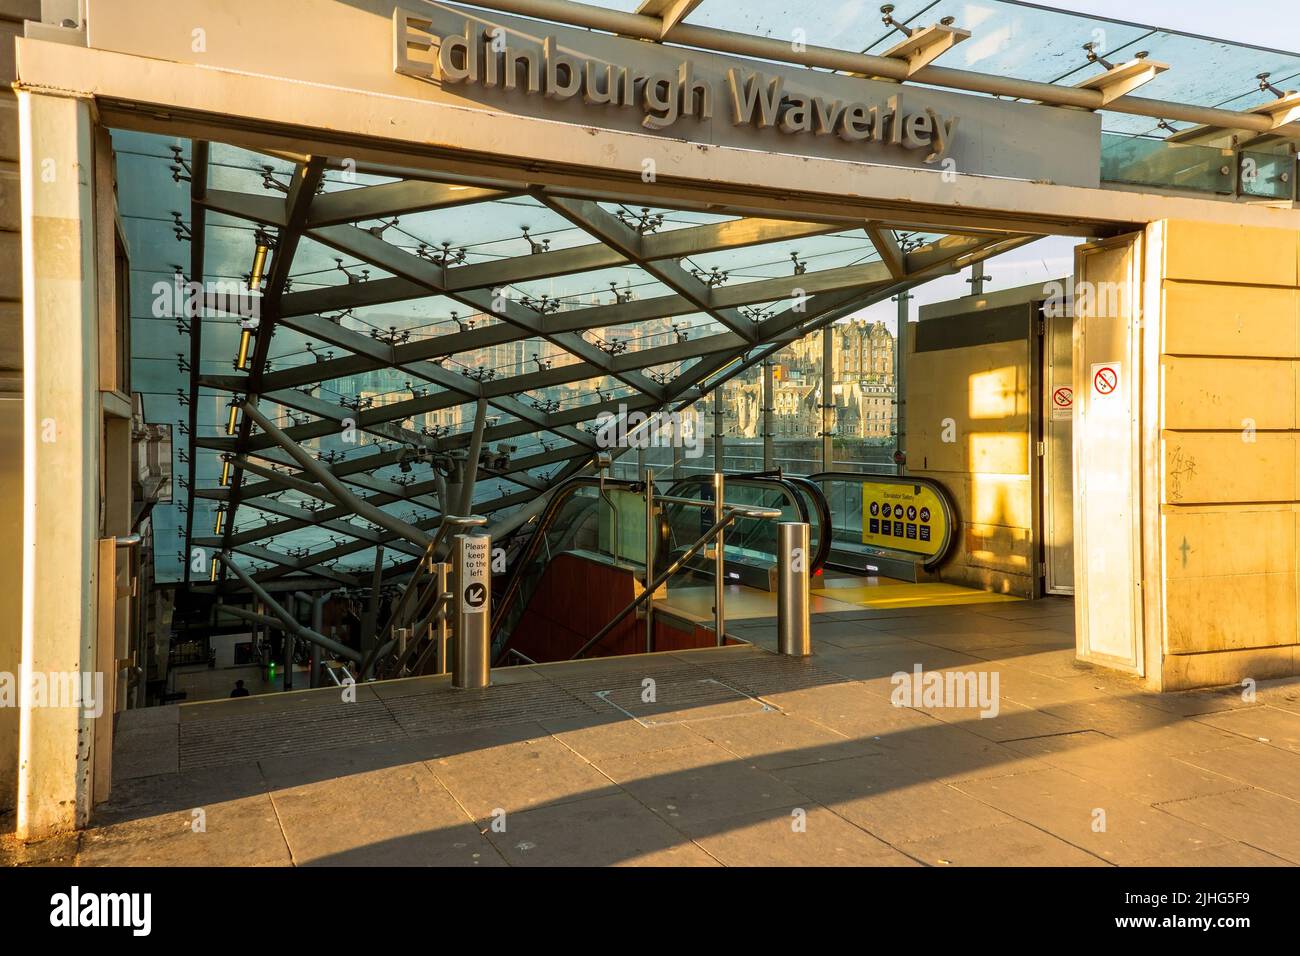 Entrance to Edinburgh Waverley Train Station for catching your train, Edinburgh, Scotland Stock Photo